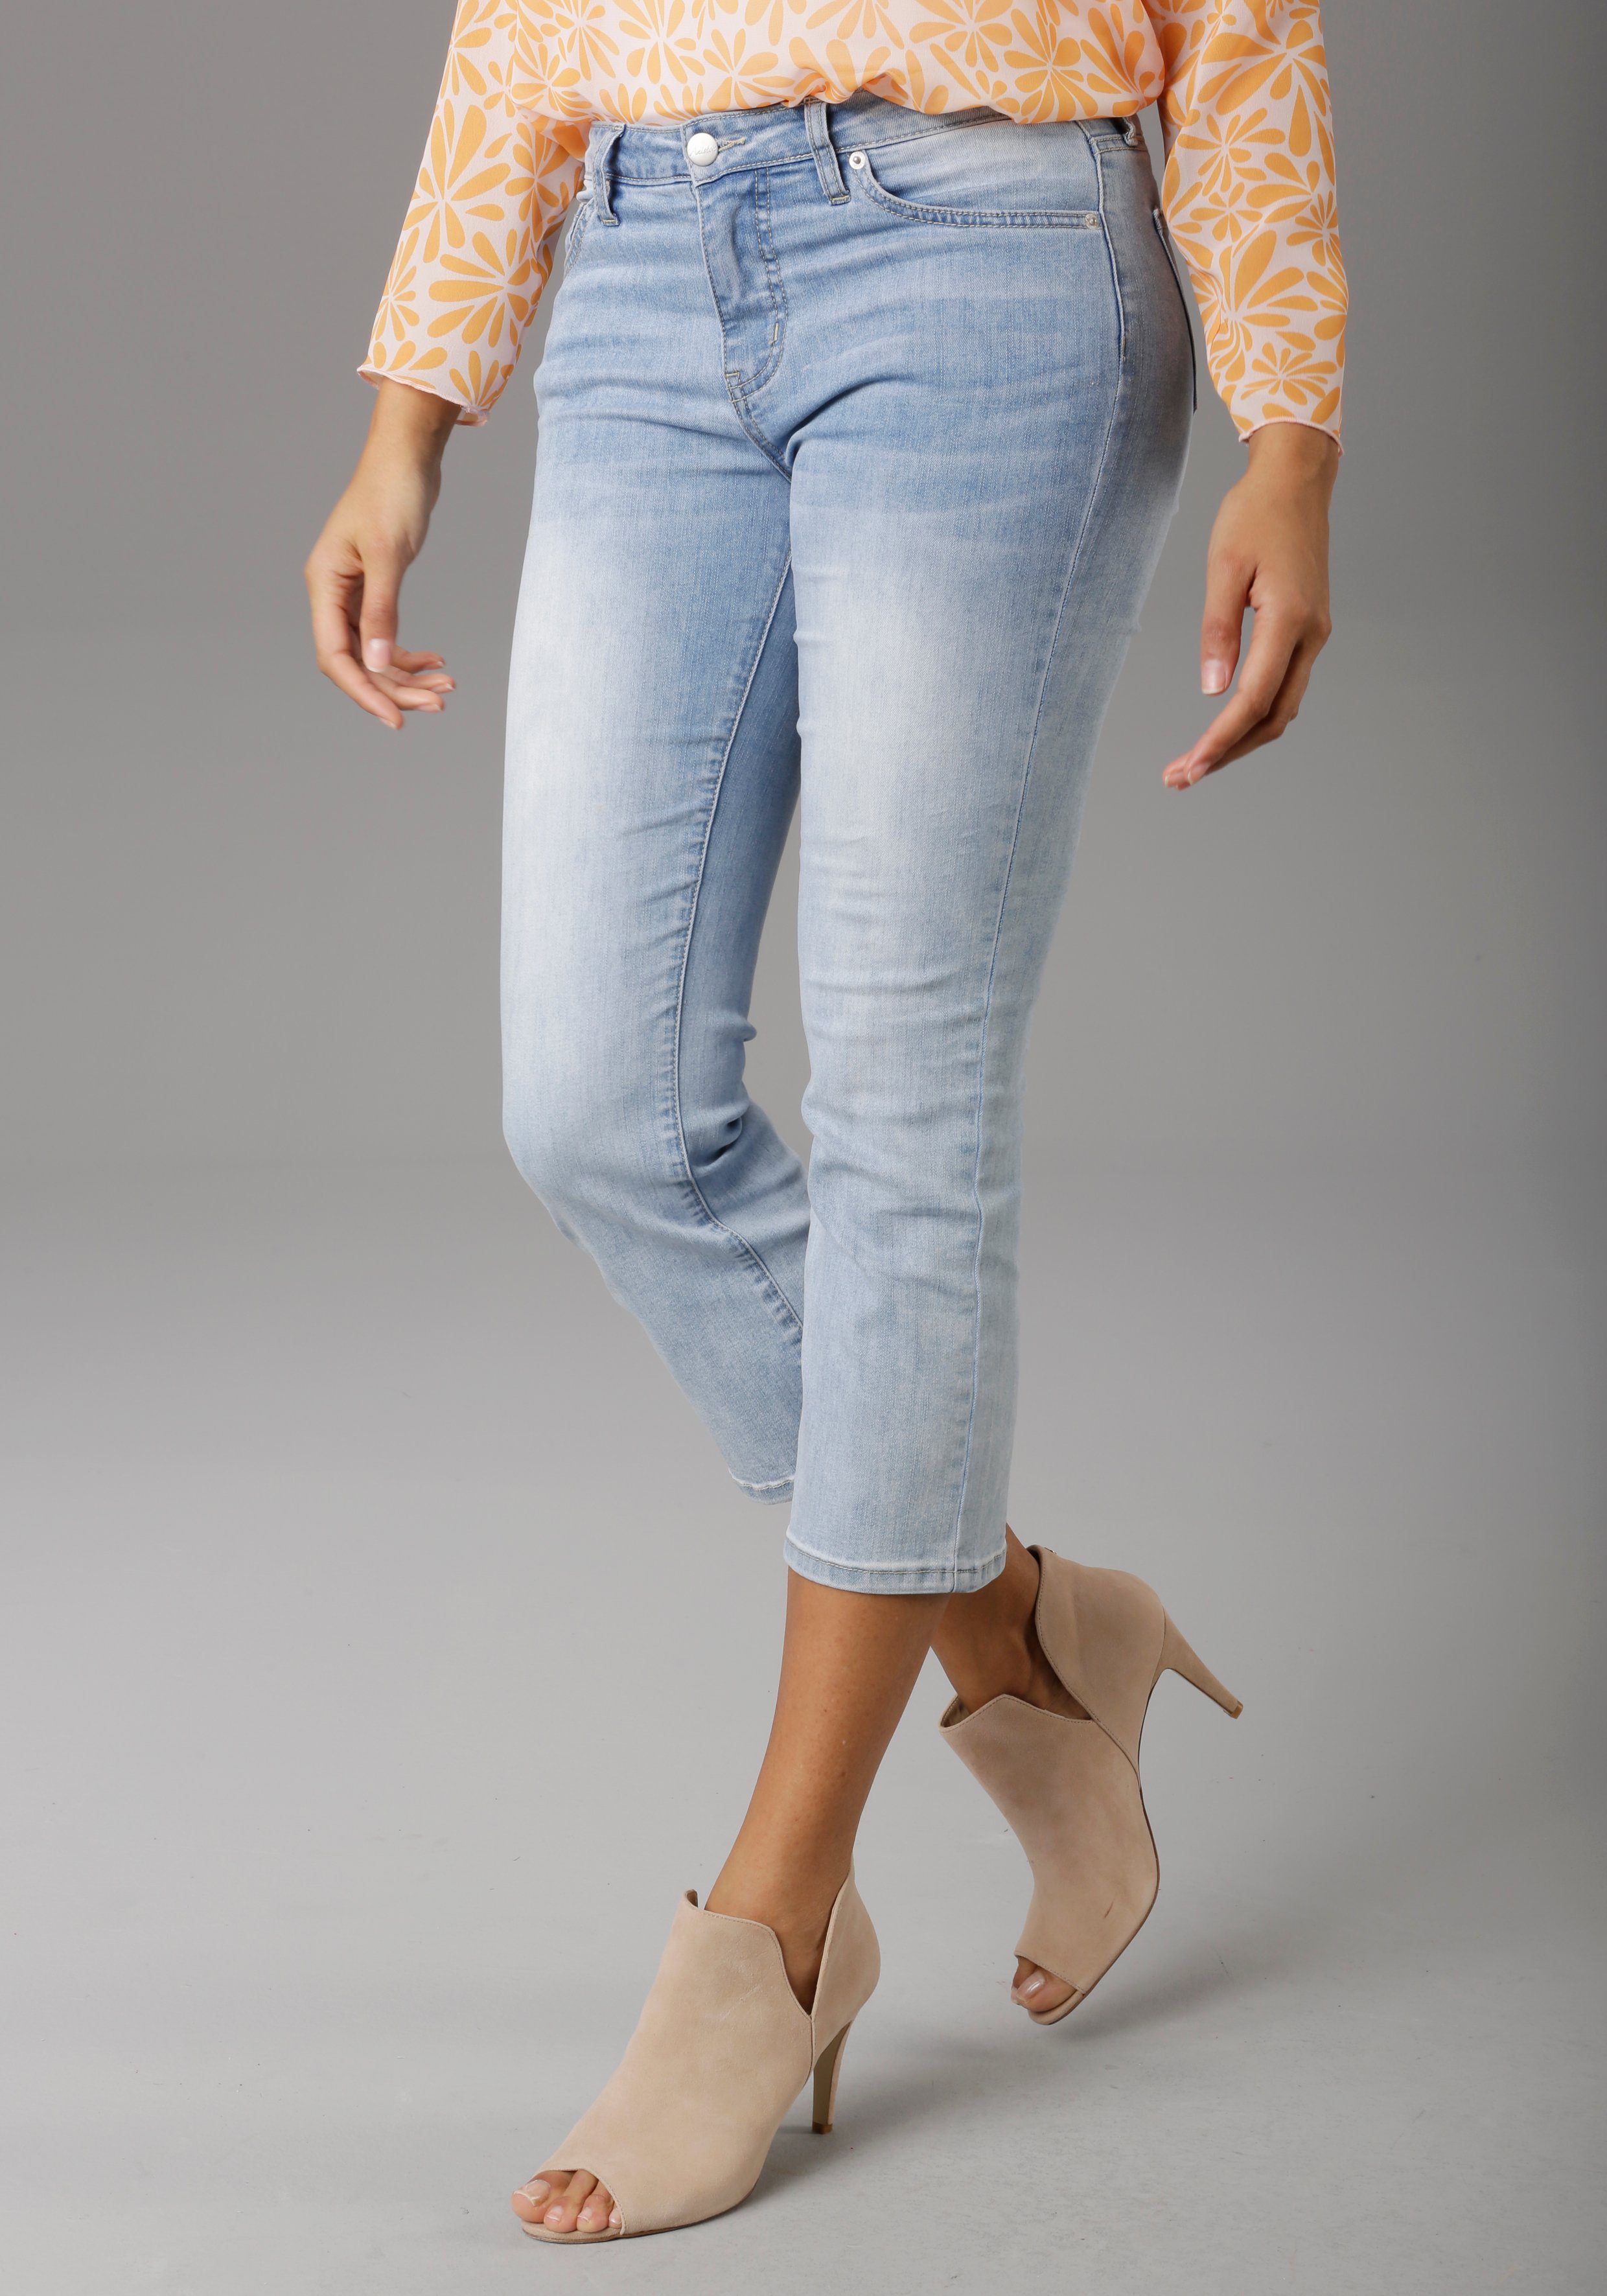 【Kostenloser Versand】 Aniston SELECTED Straight-Jeans in verkürzter light-blue-washed cropped Länge